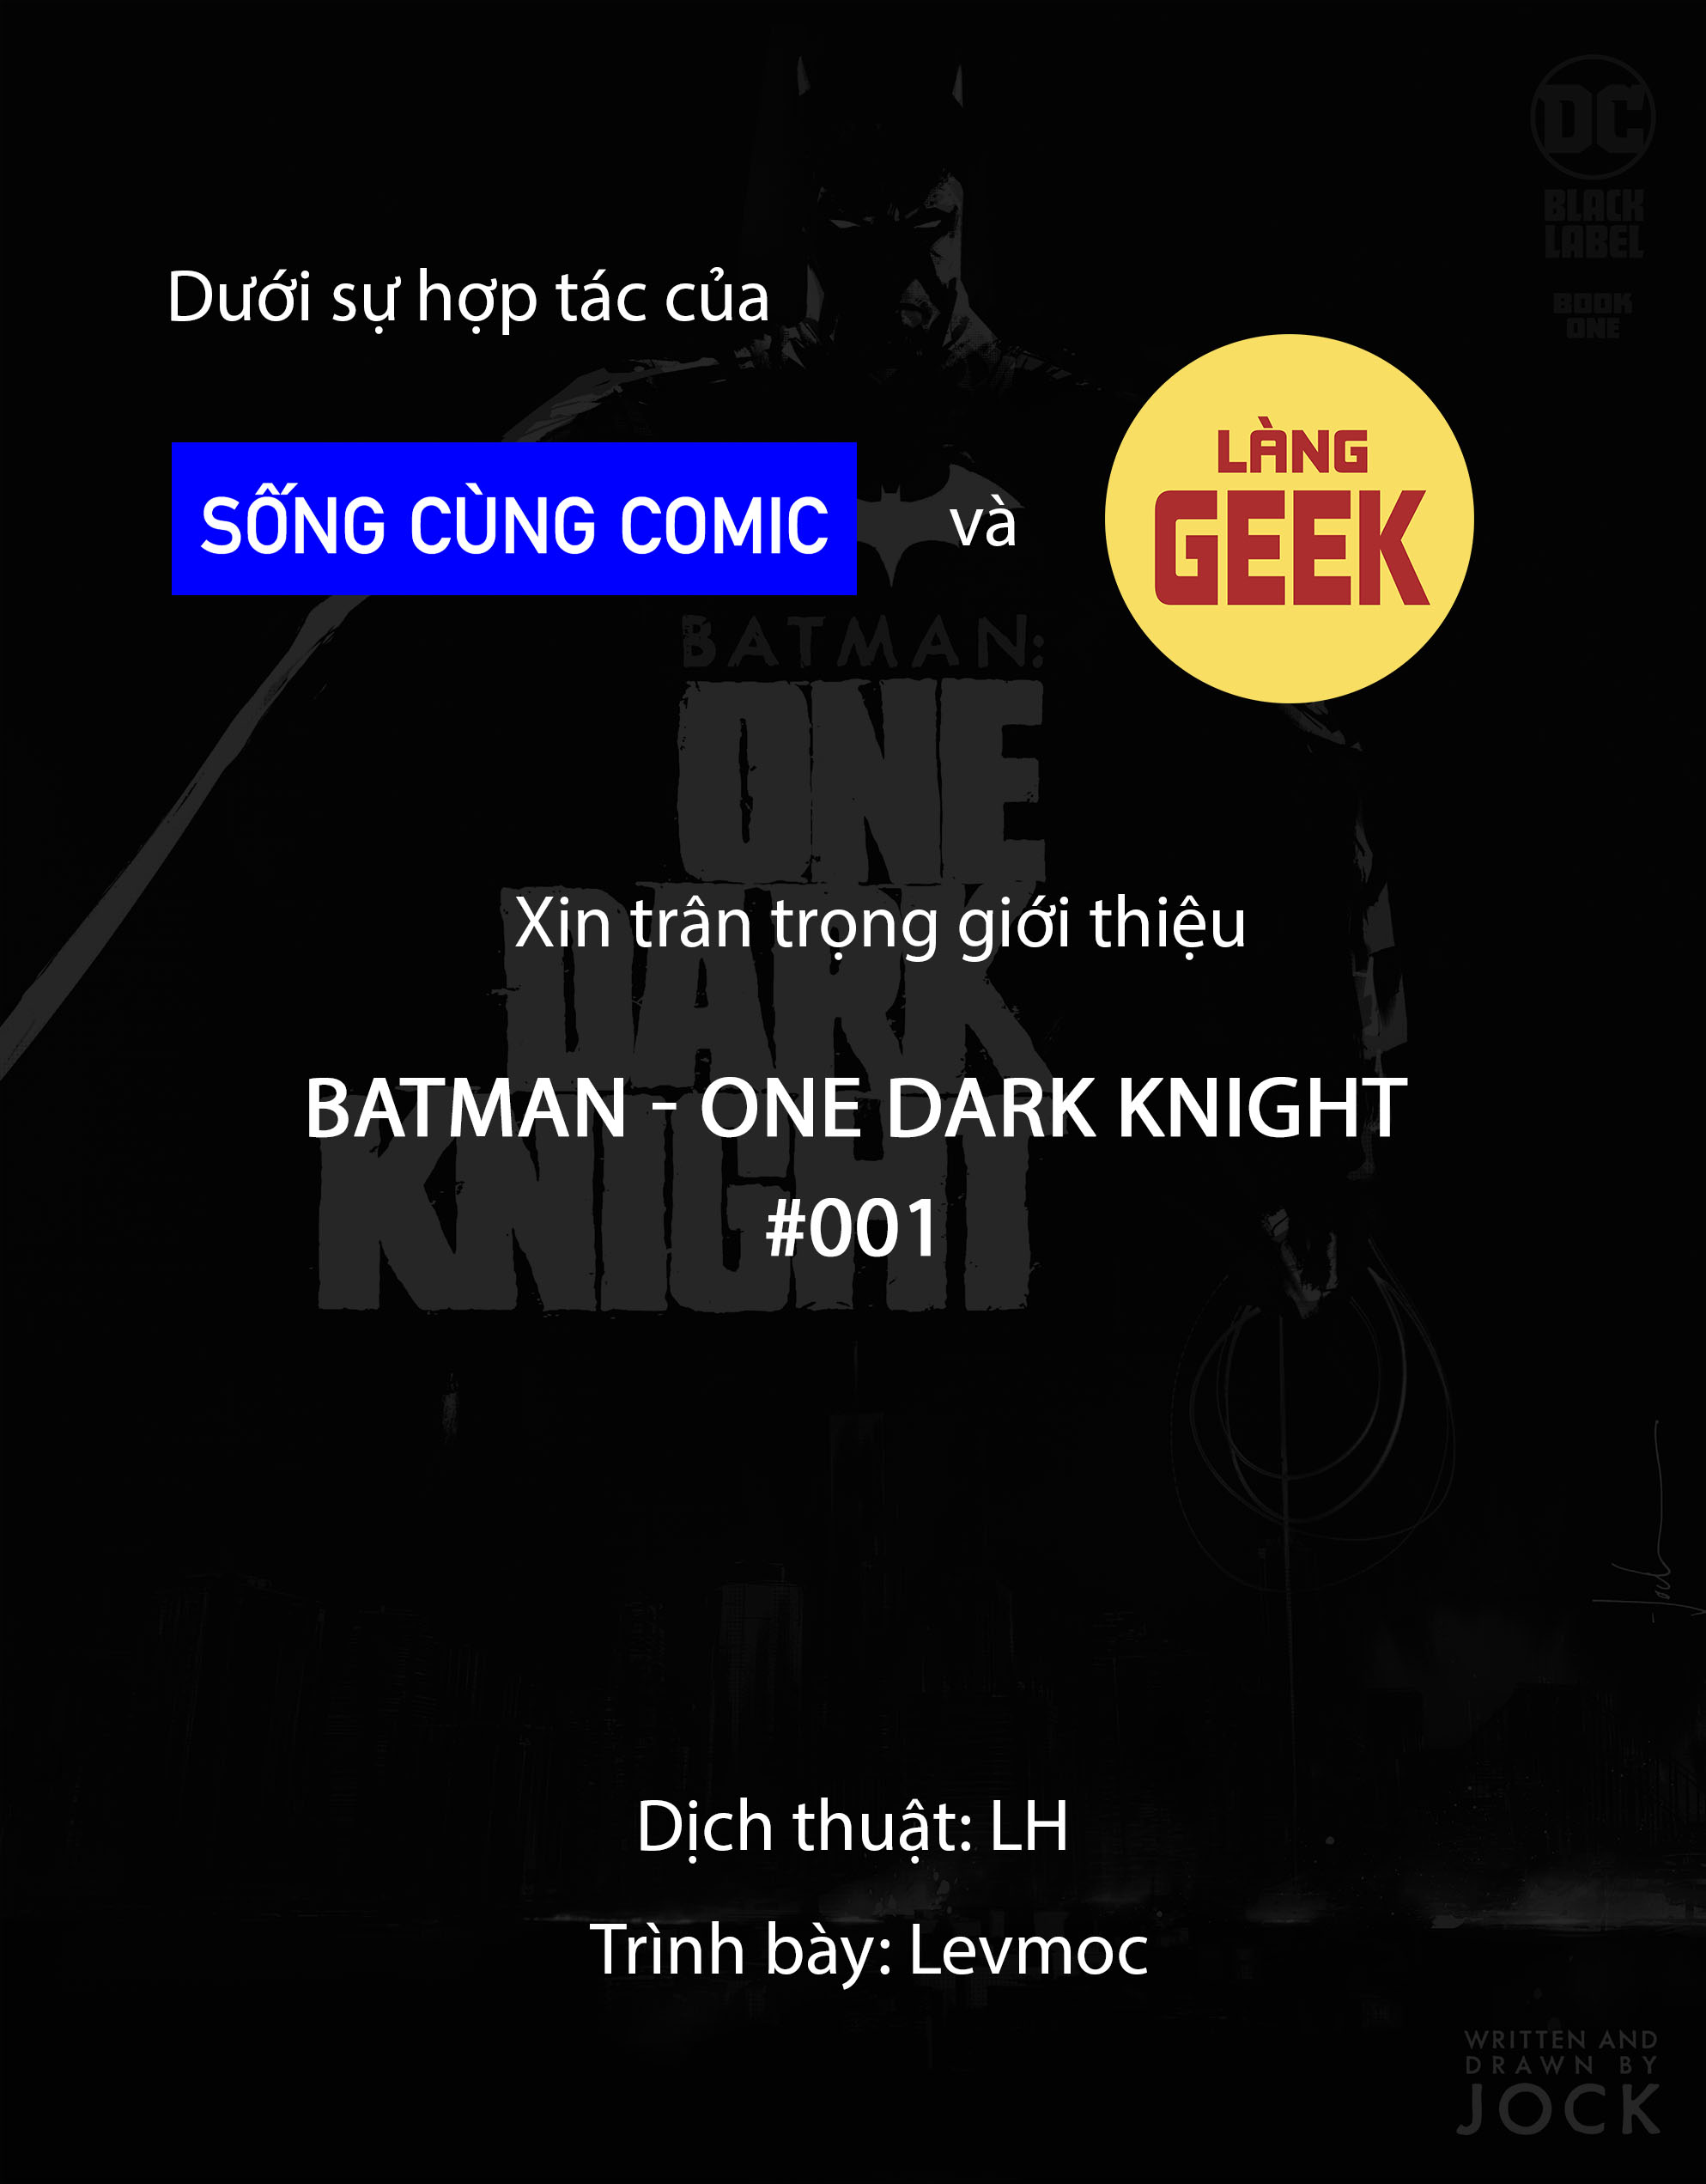 https://langgeek.net/wp-content/webpc-passthru.php?src=https://langgeek.net/wp-content/uploads/2021/12/Batman-One-Dark-Knight-2021-001-000-1.jpg&nocache=1